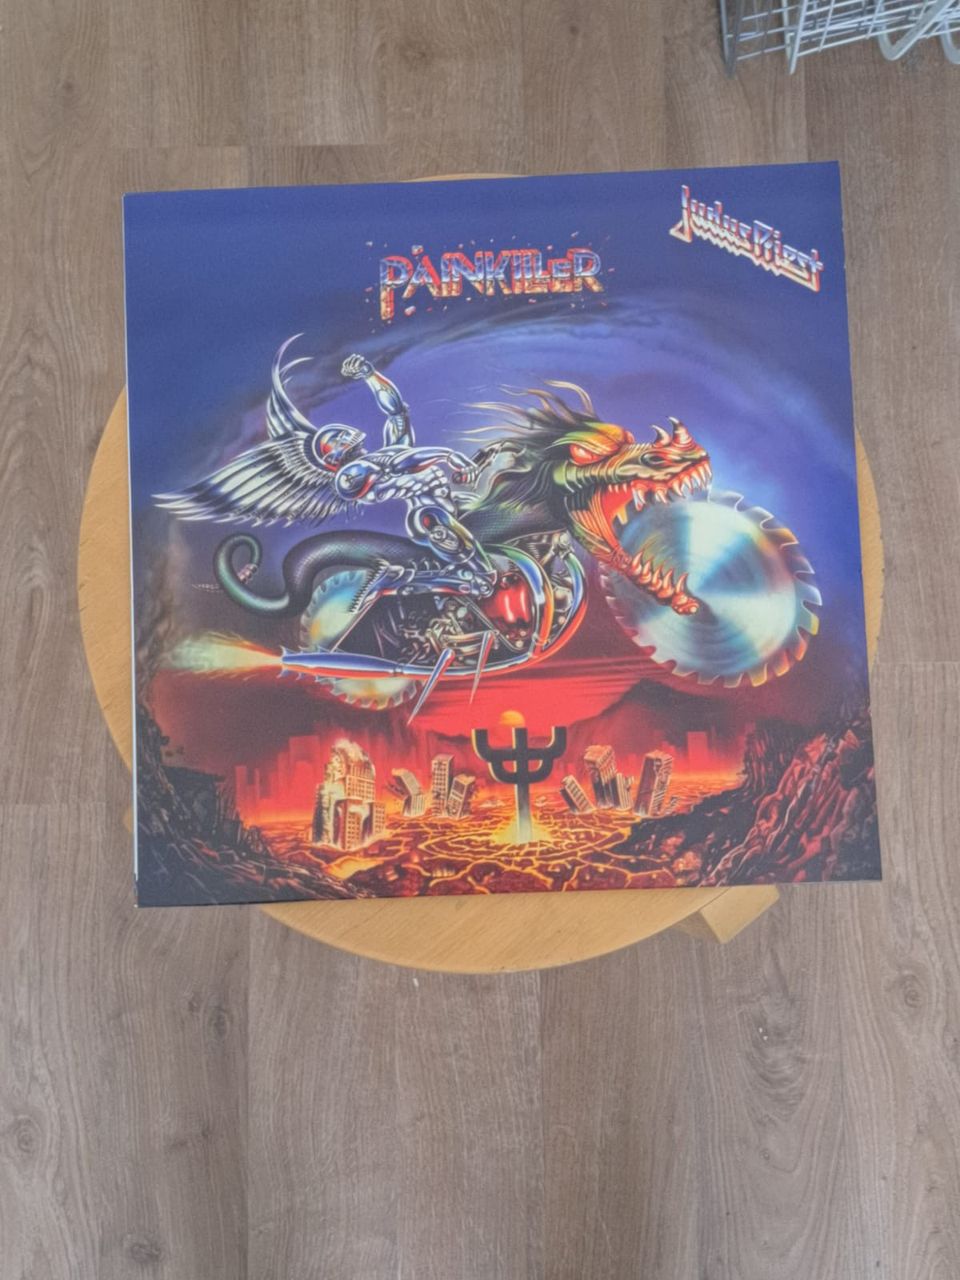 Painkiller - Judas Priest LP